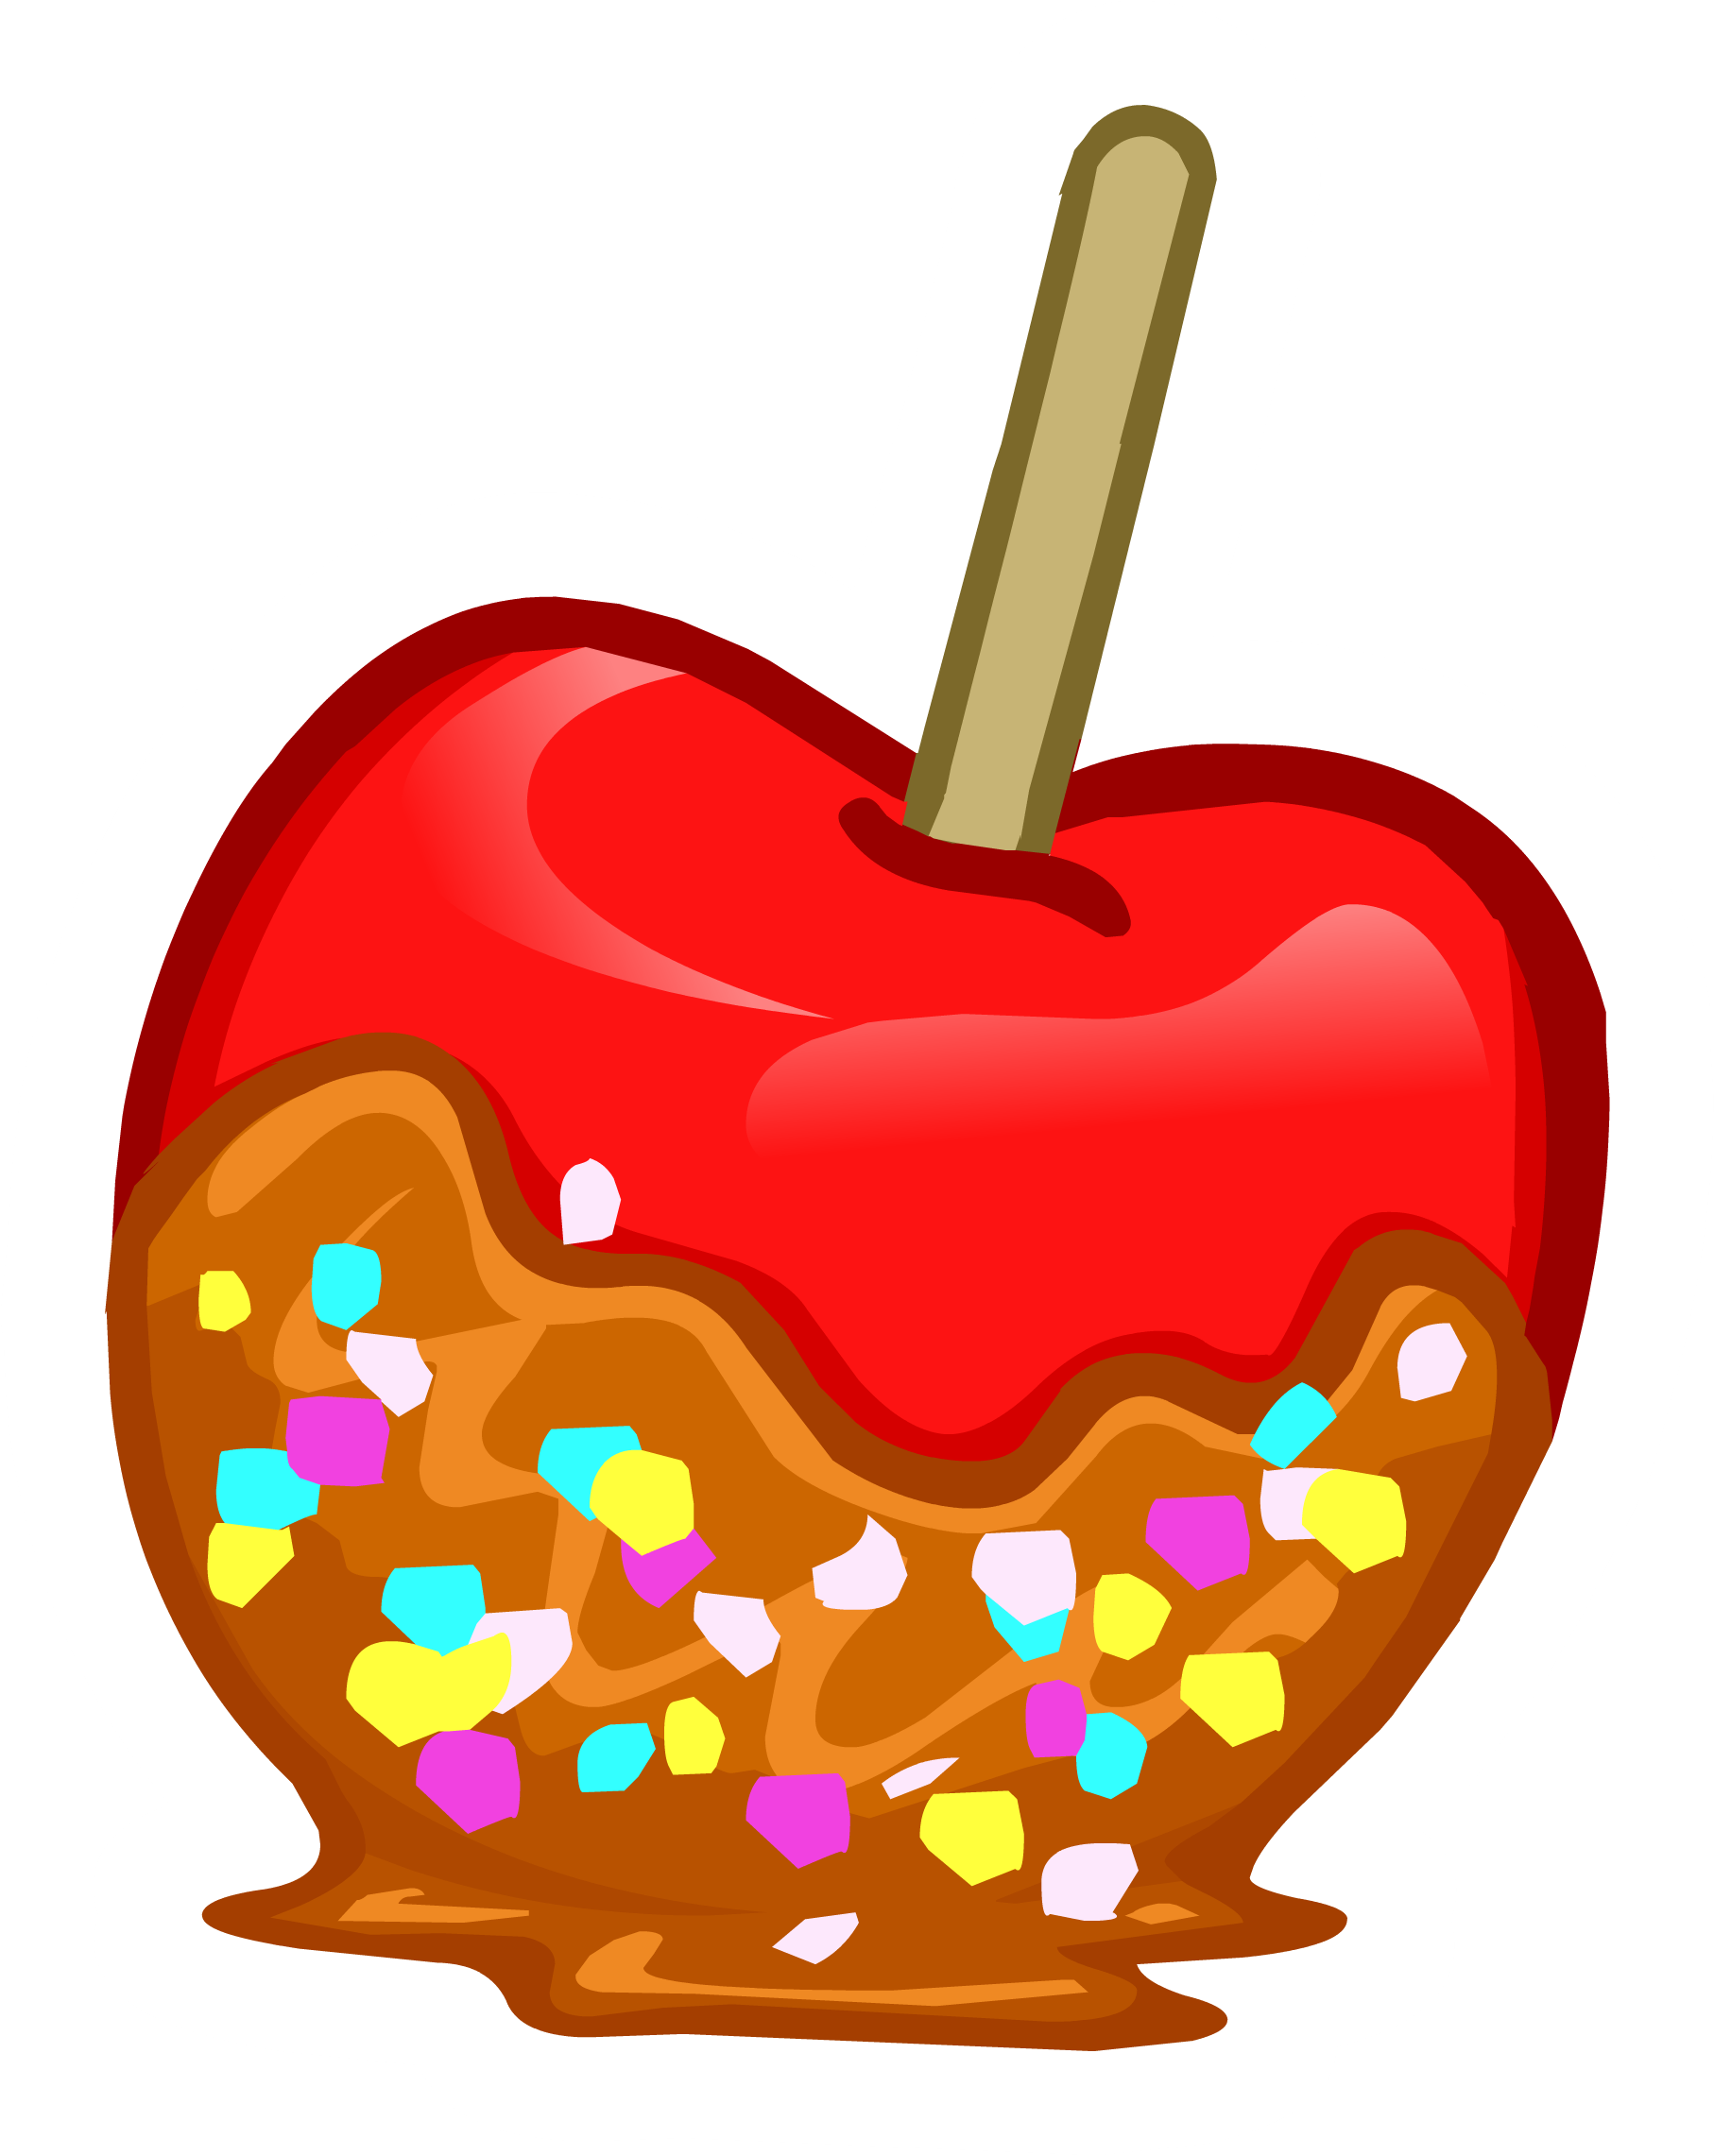 Candy apple - Wikipedia